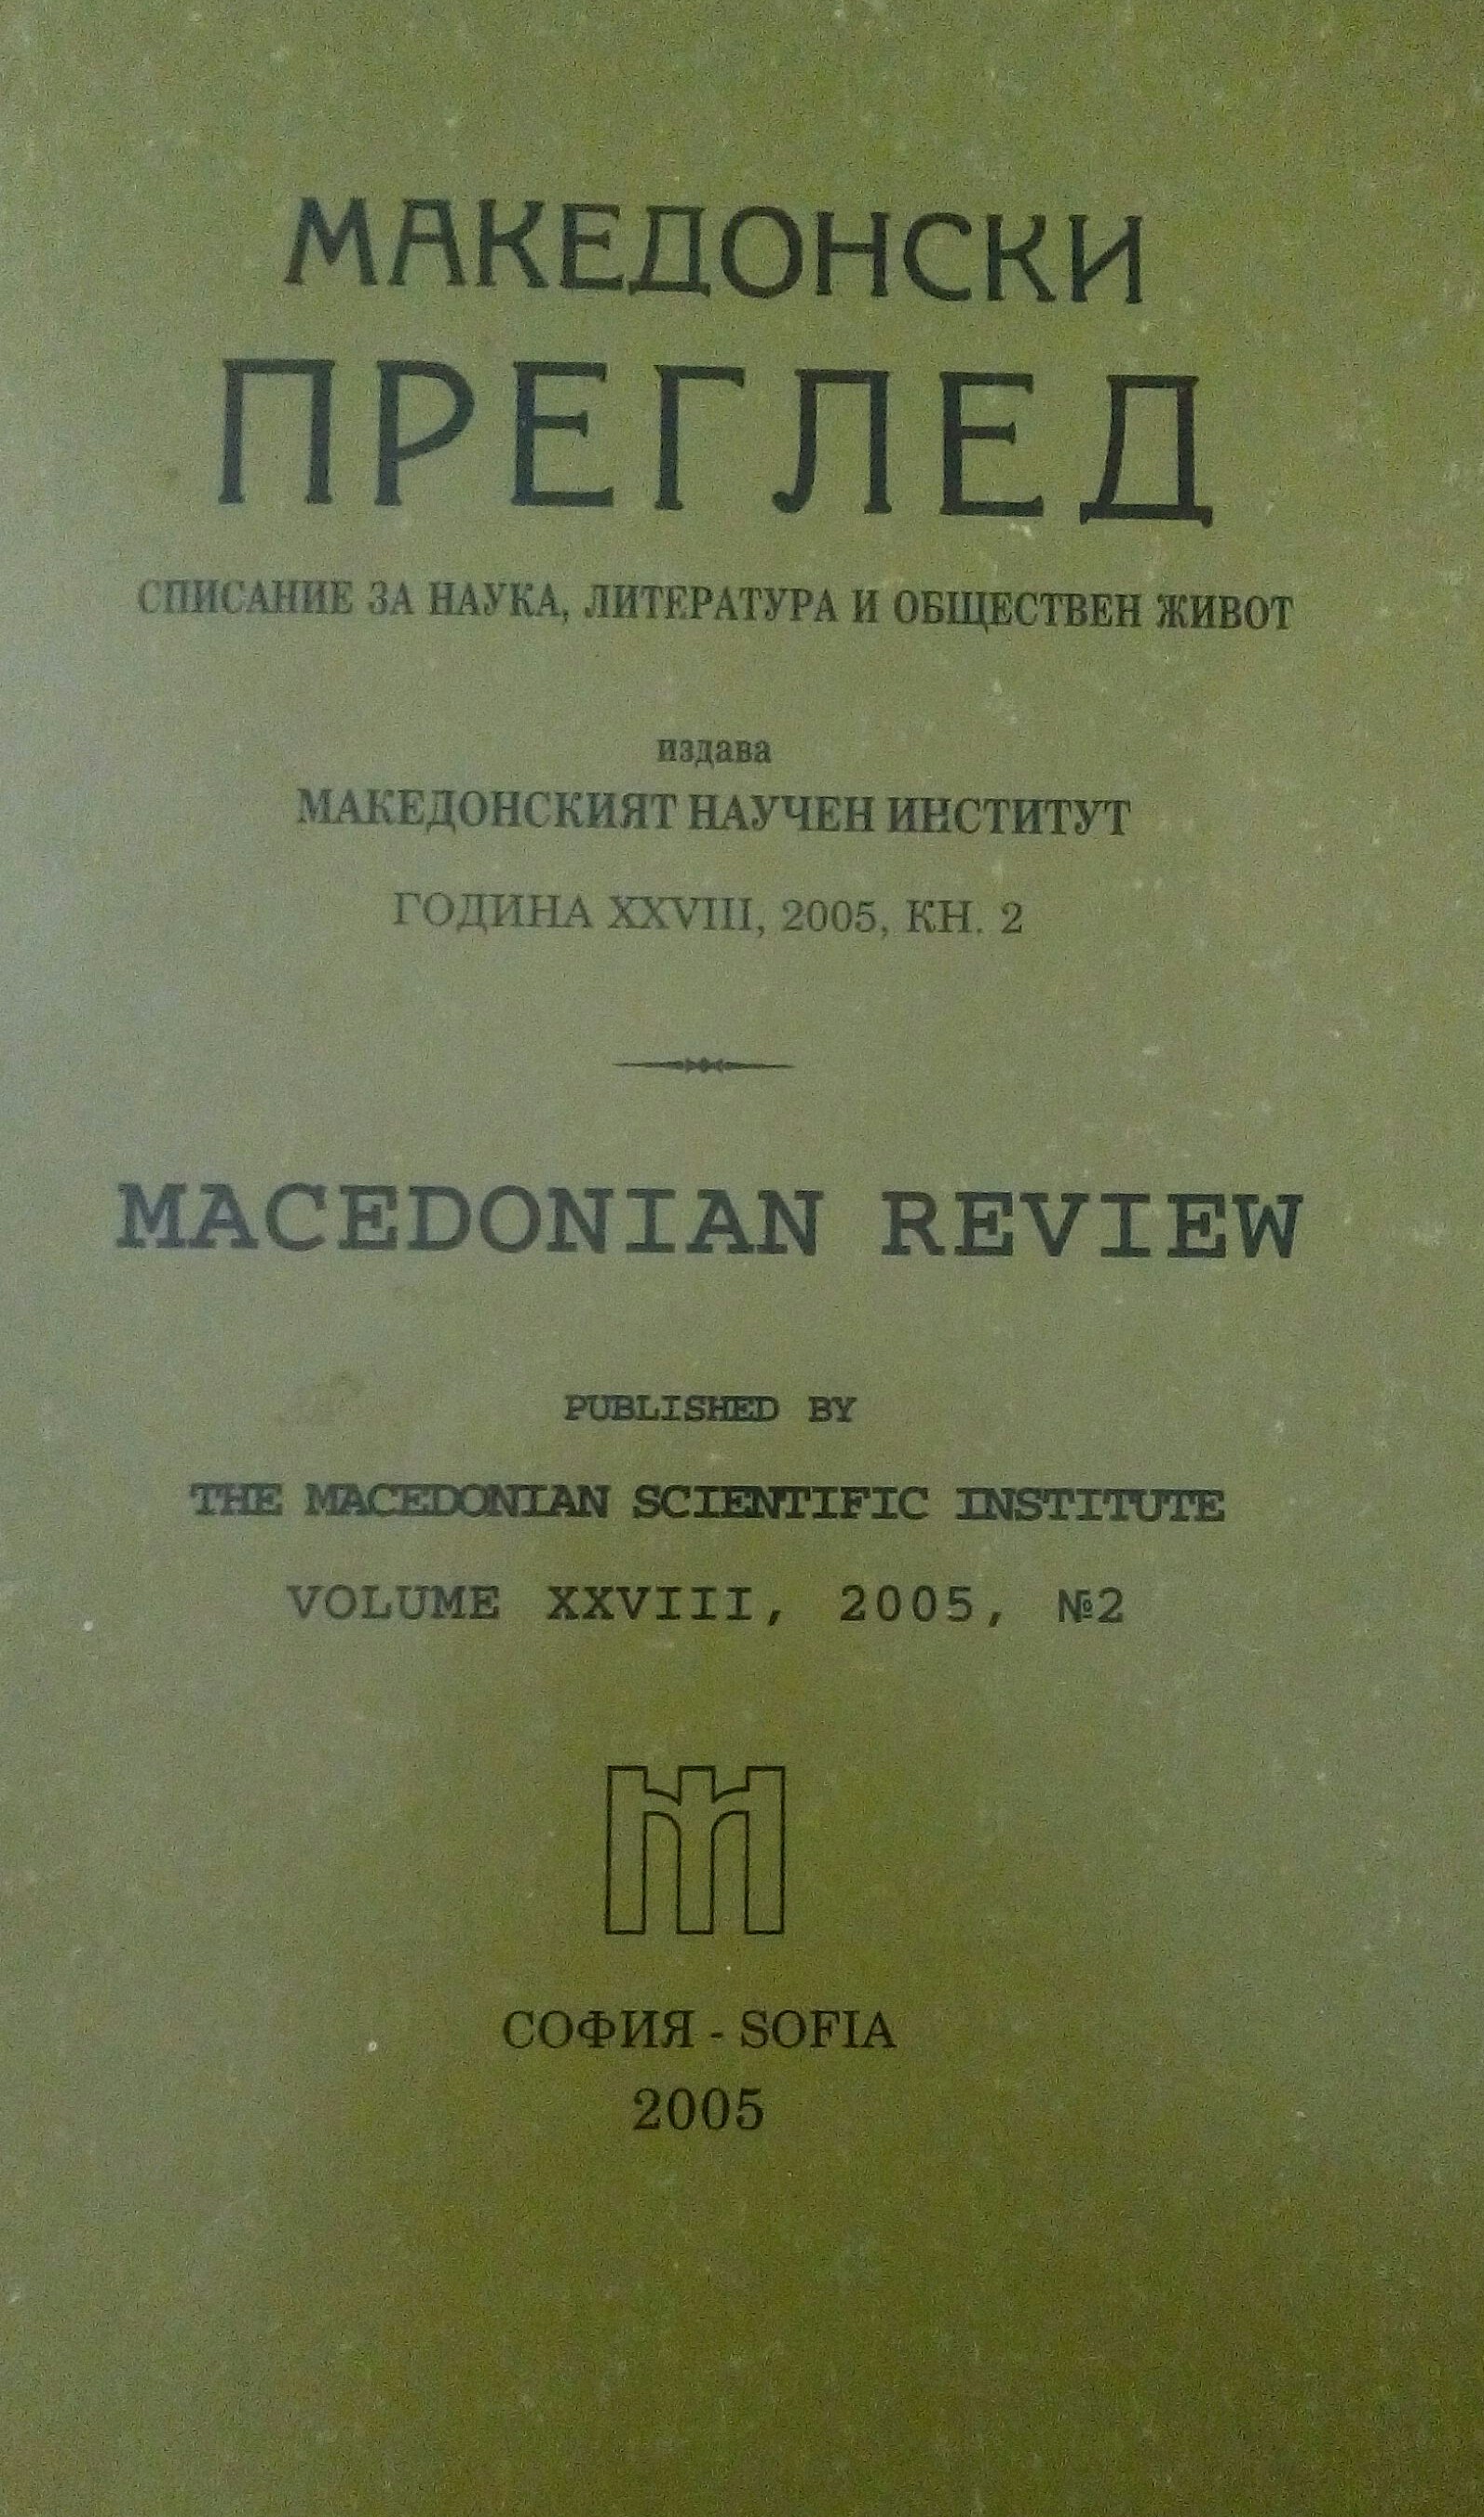 Zheko Popov. Romania and and the Bulgarian national question. (Macedonia and Dobridzha) 1903 — 1913. Sofia, 2004, 317 p. Review by Todor Dimitrov Cover Image